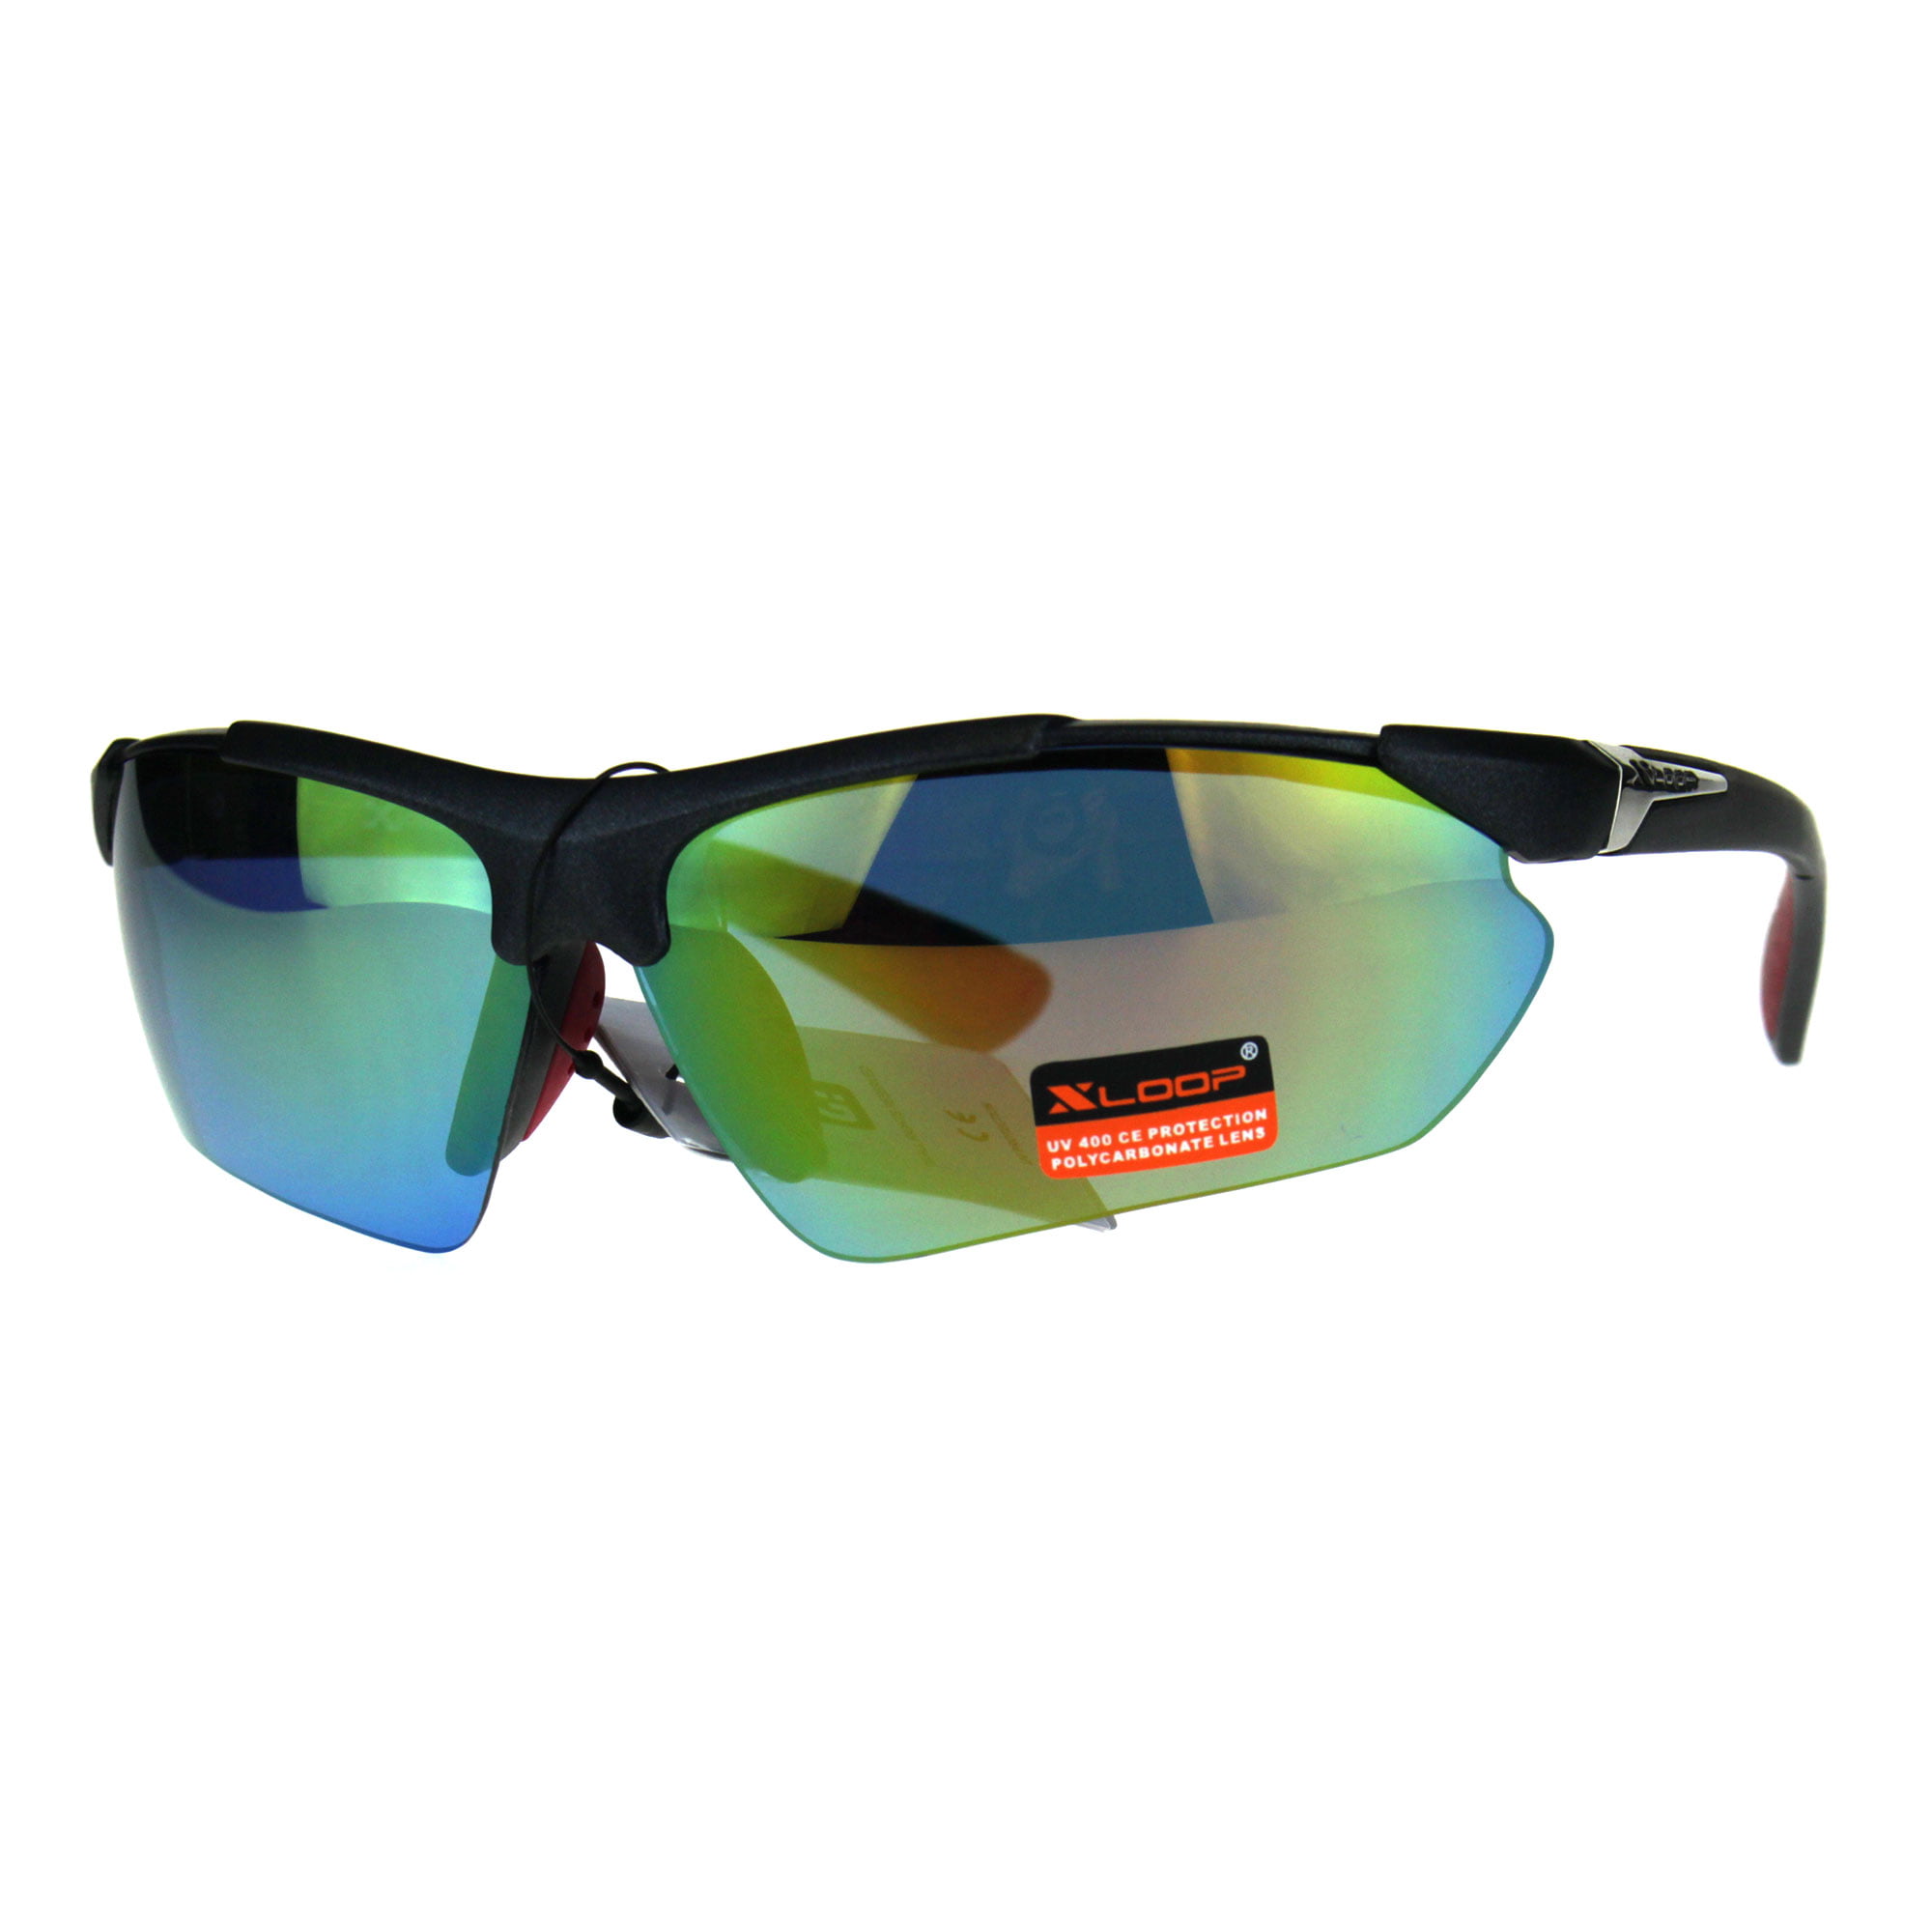 Pugs Eyegear Action Sport Goggles Polycarbonate Lenses UV400 GUNMETAL 